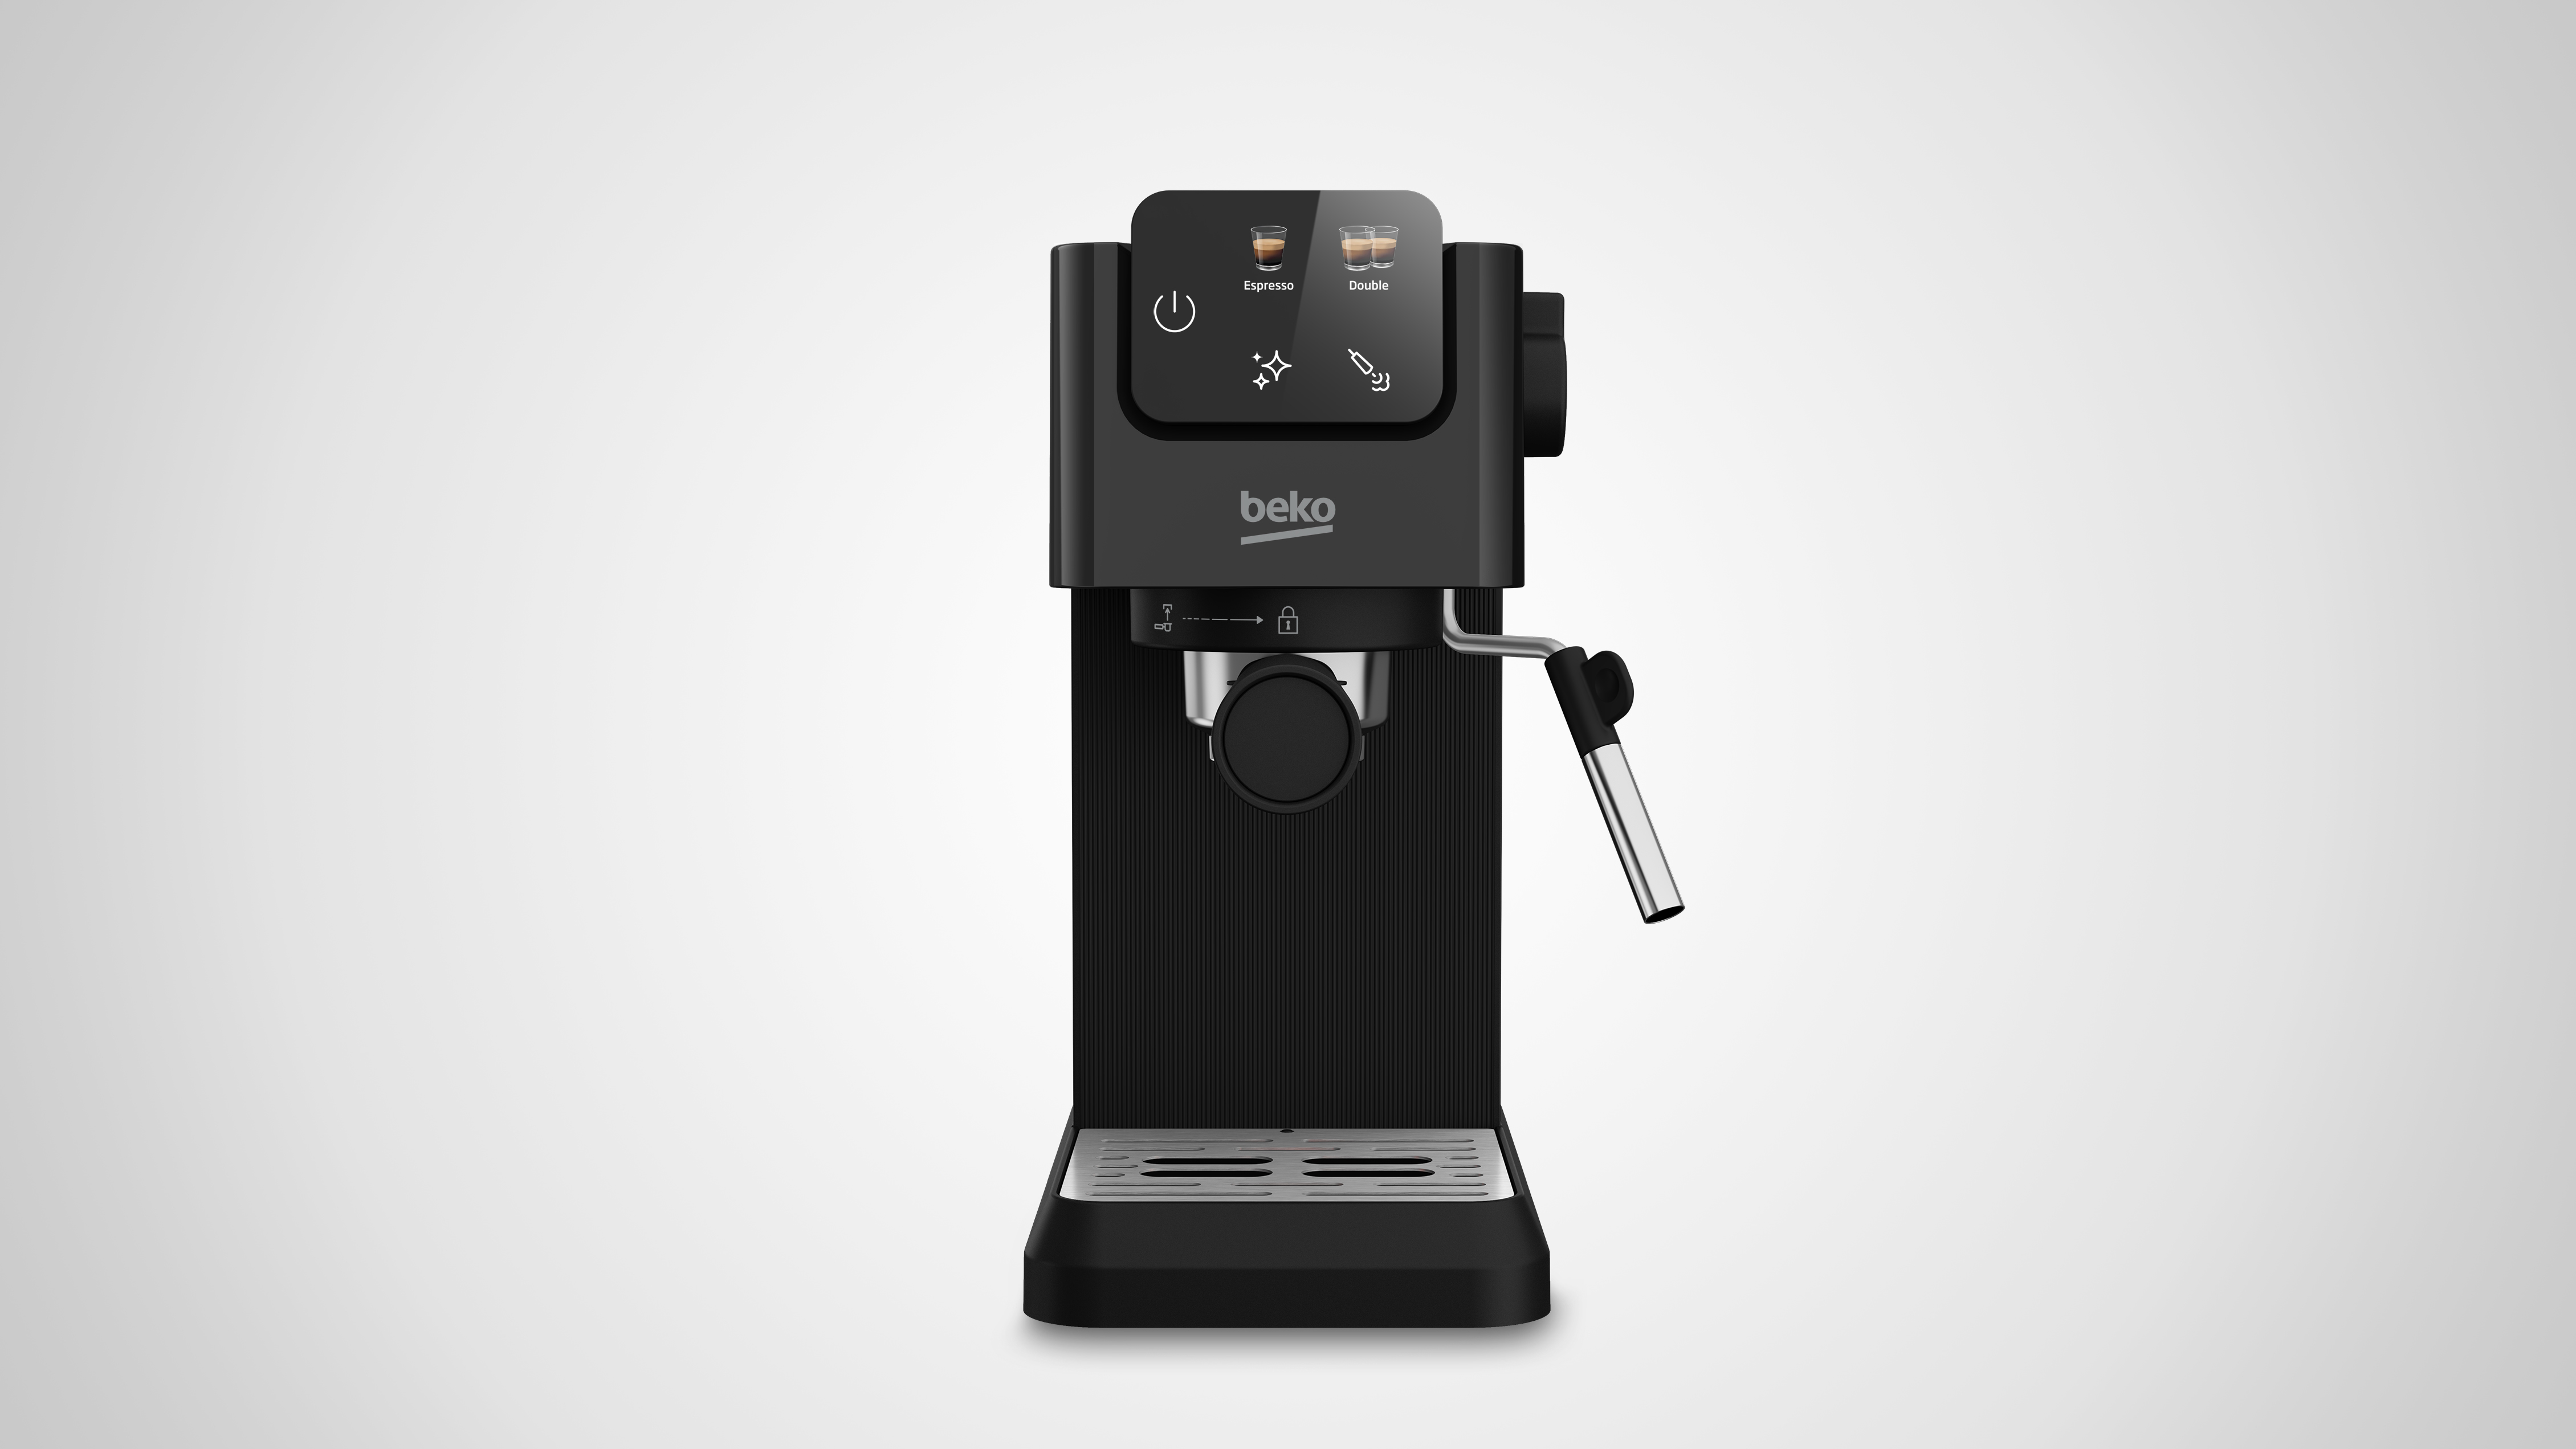 Beko CaffeExperto Series CE 3000 & CE 4500 Coffee